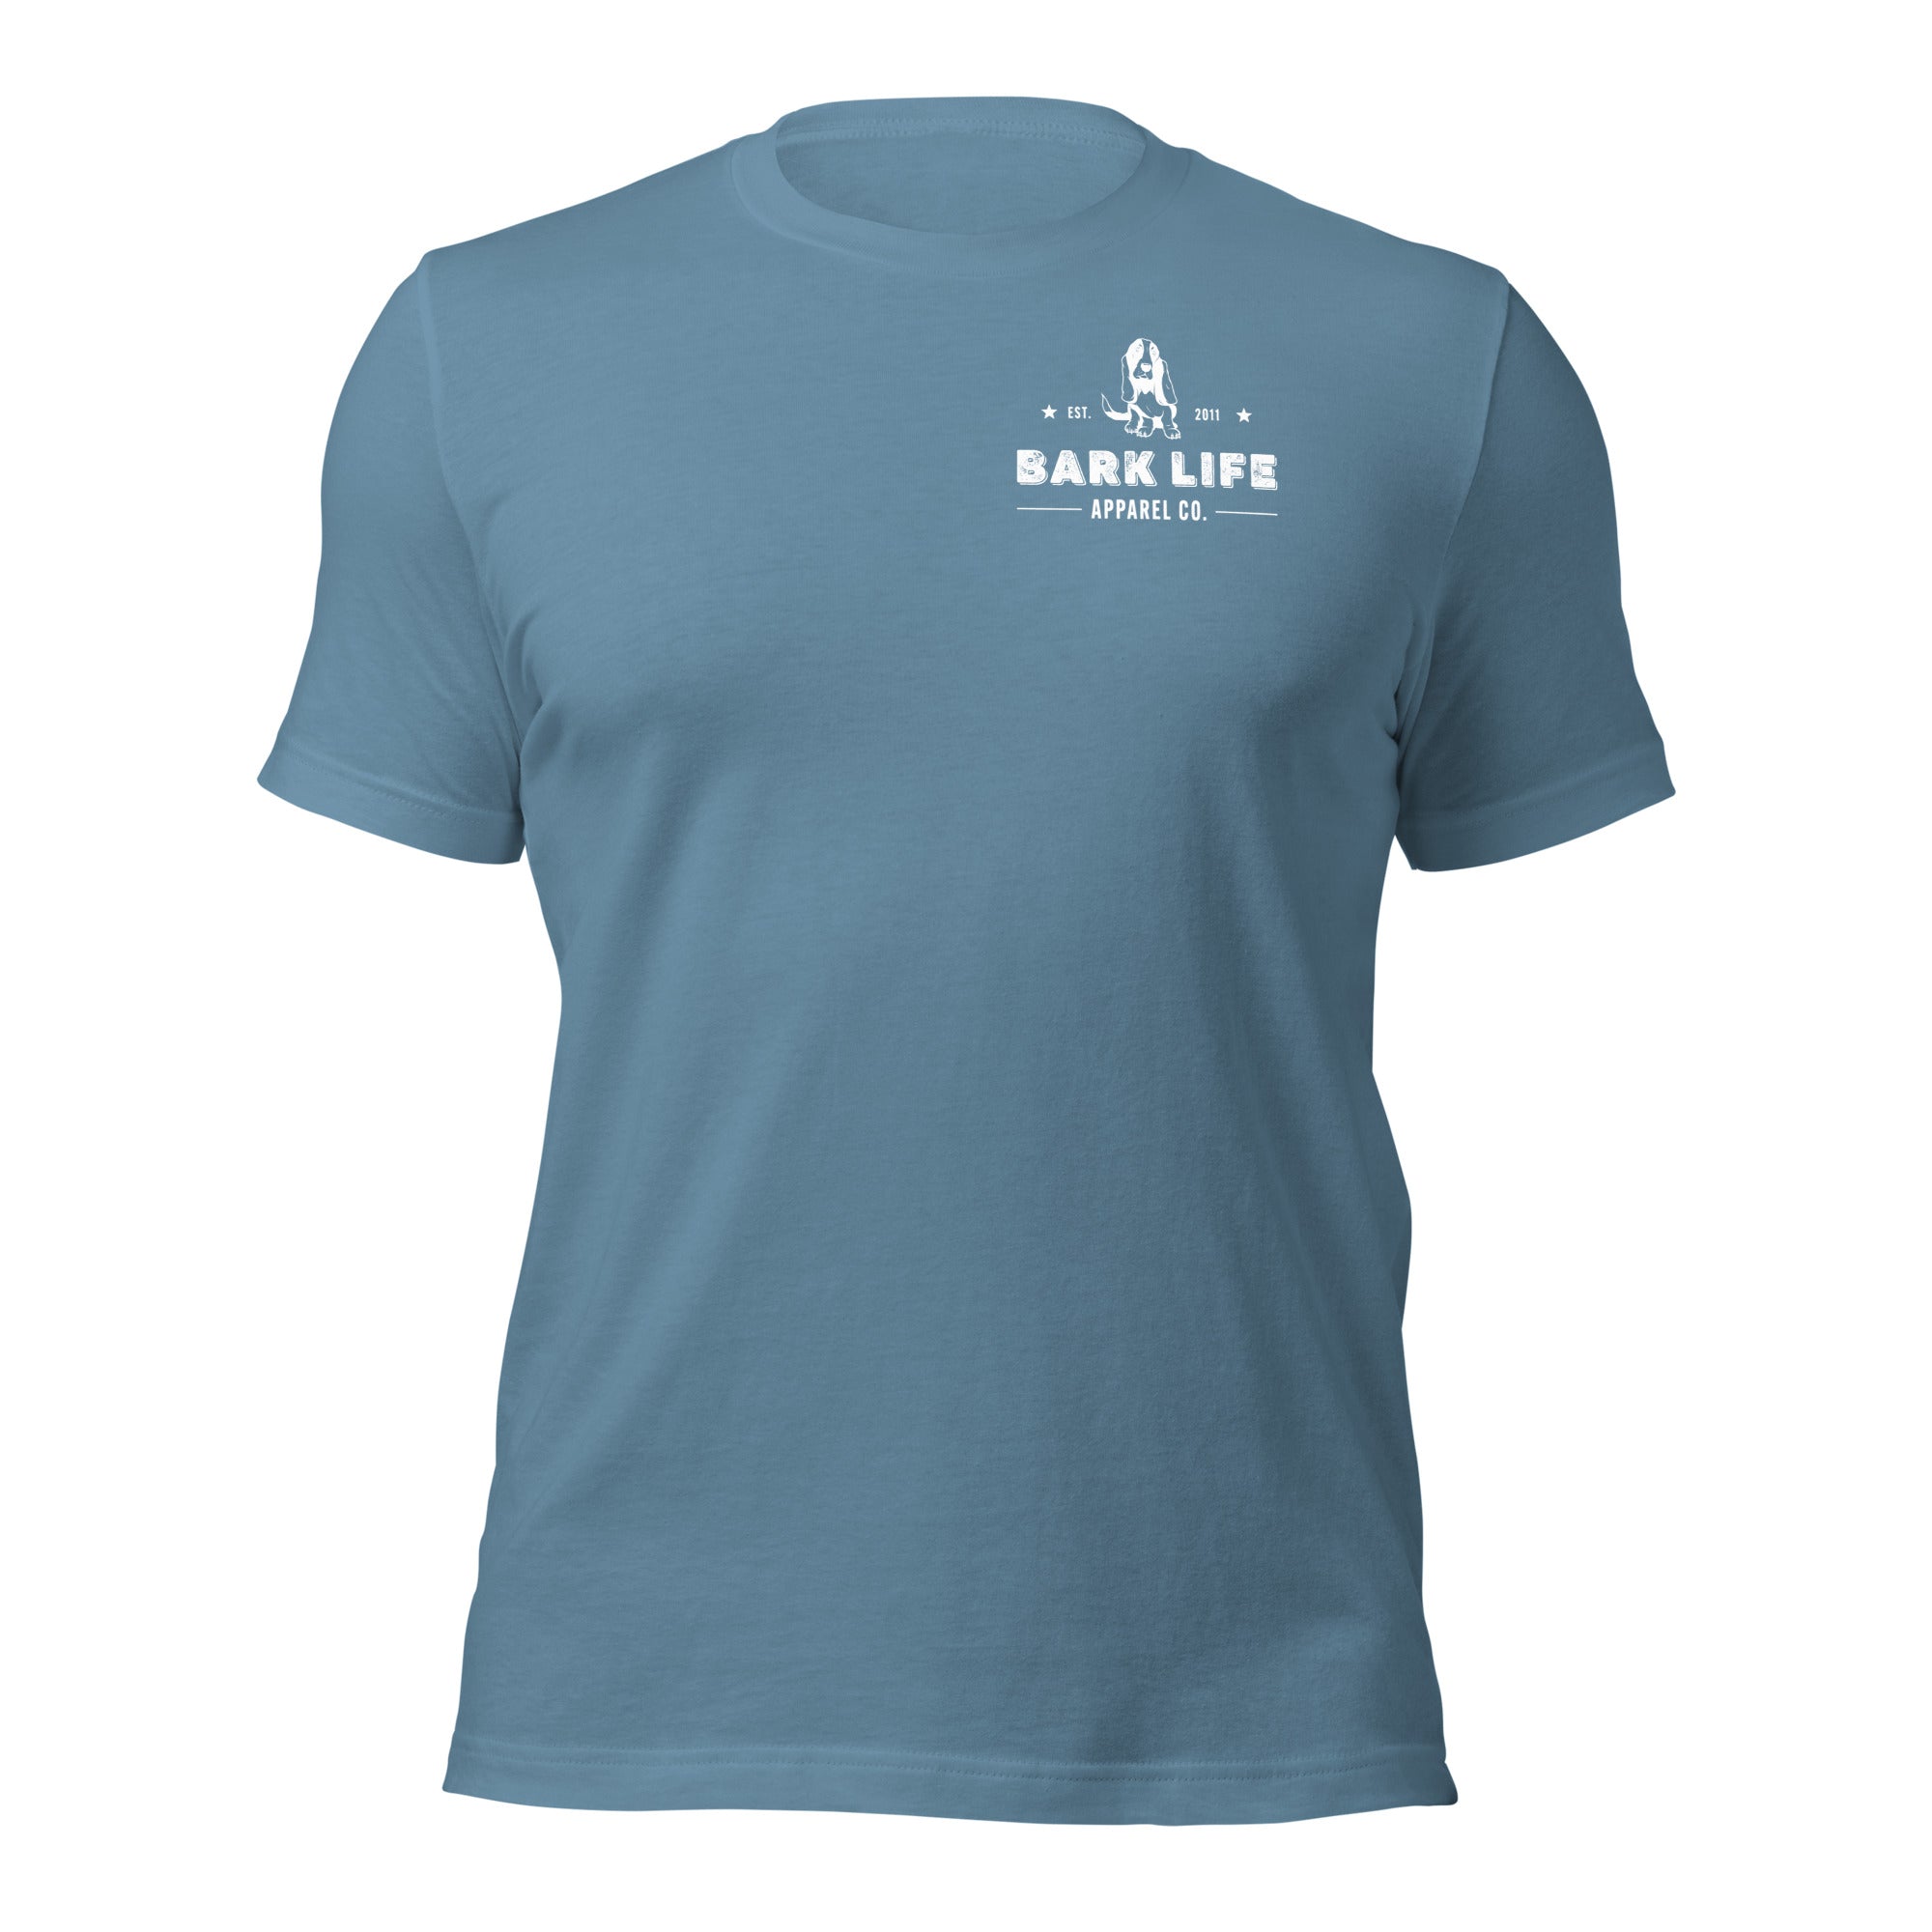 Basset Hound - Short Sleeve Cotton Tee  Shirt